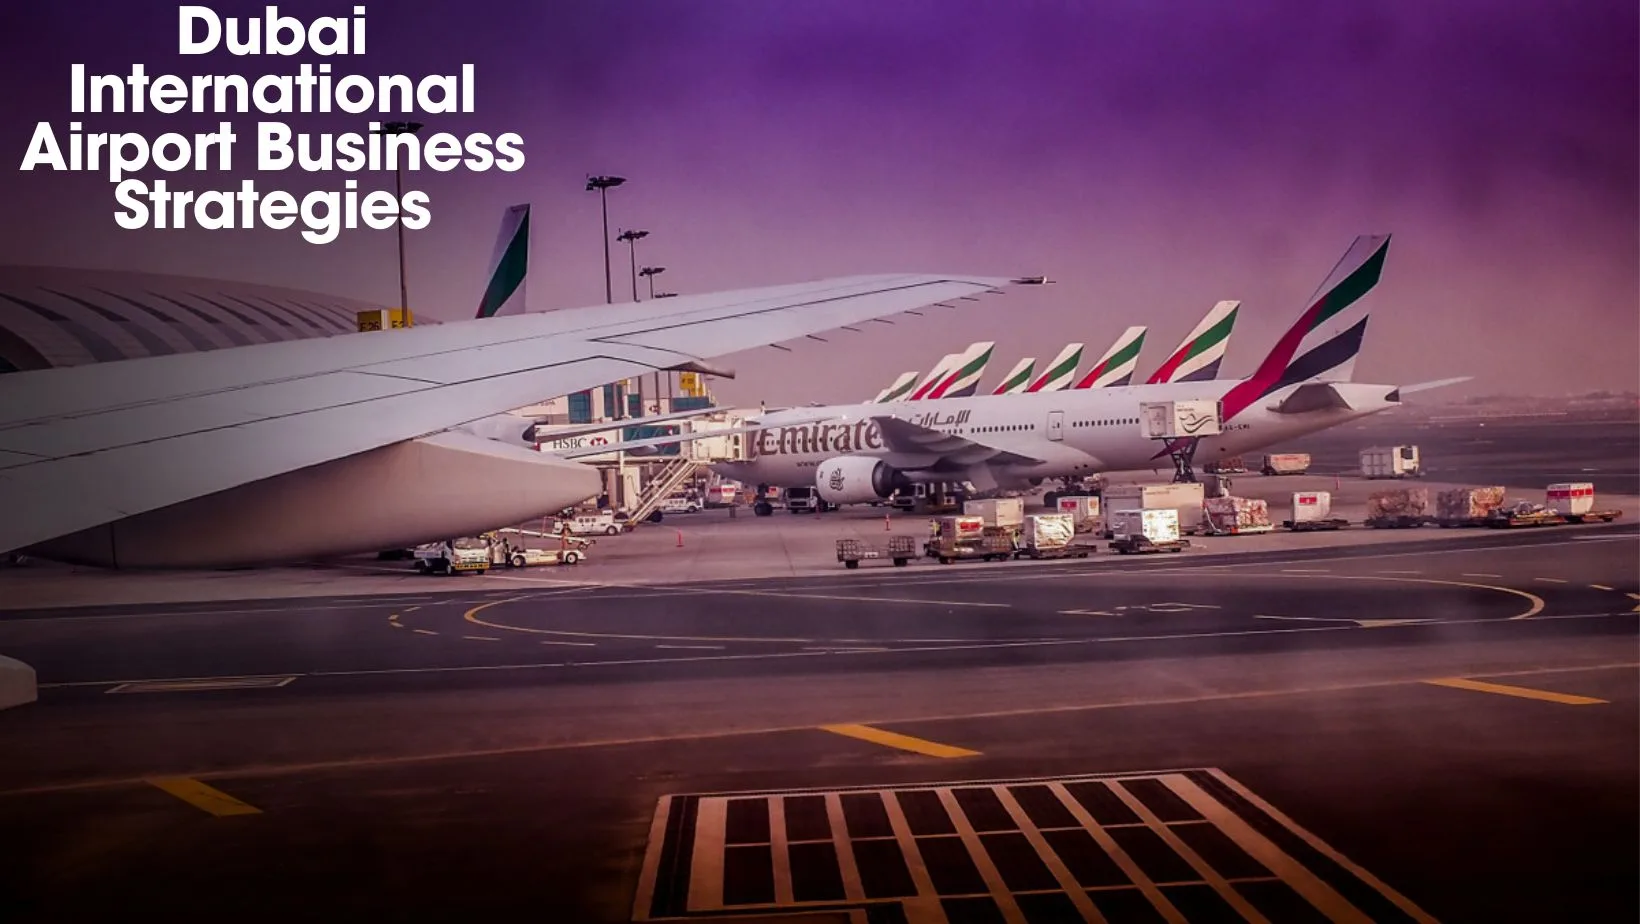 Dubai International Airport (DXB) Business Strategies